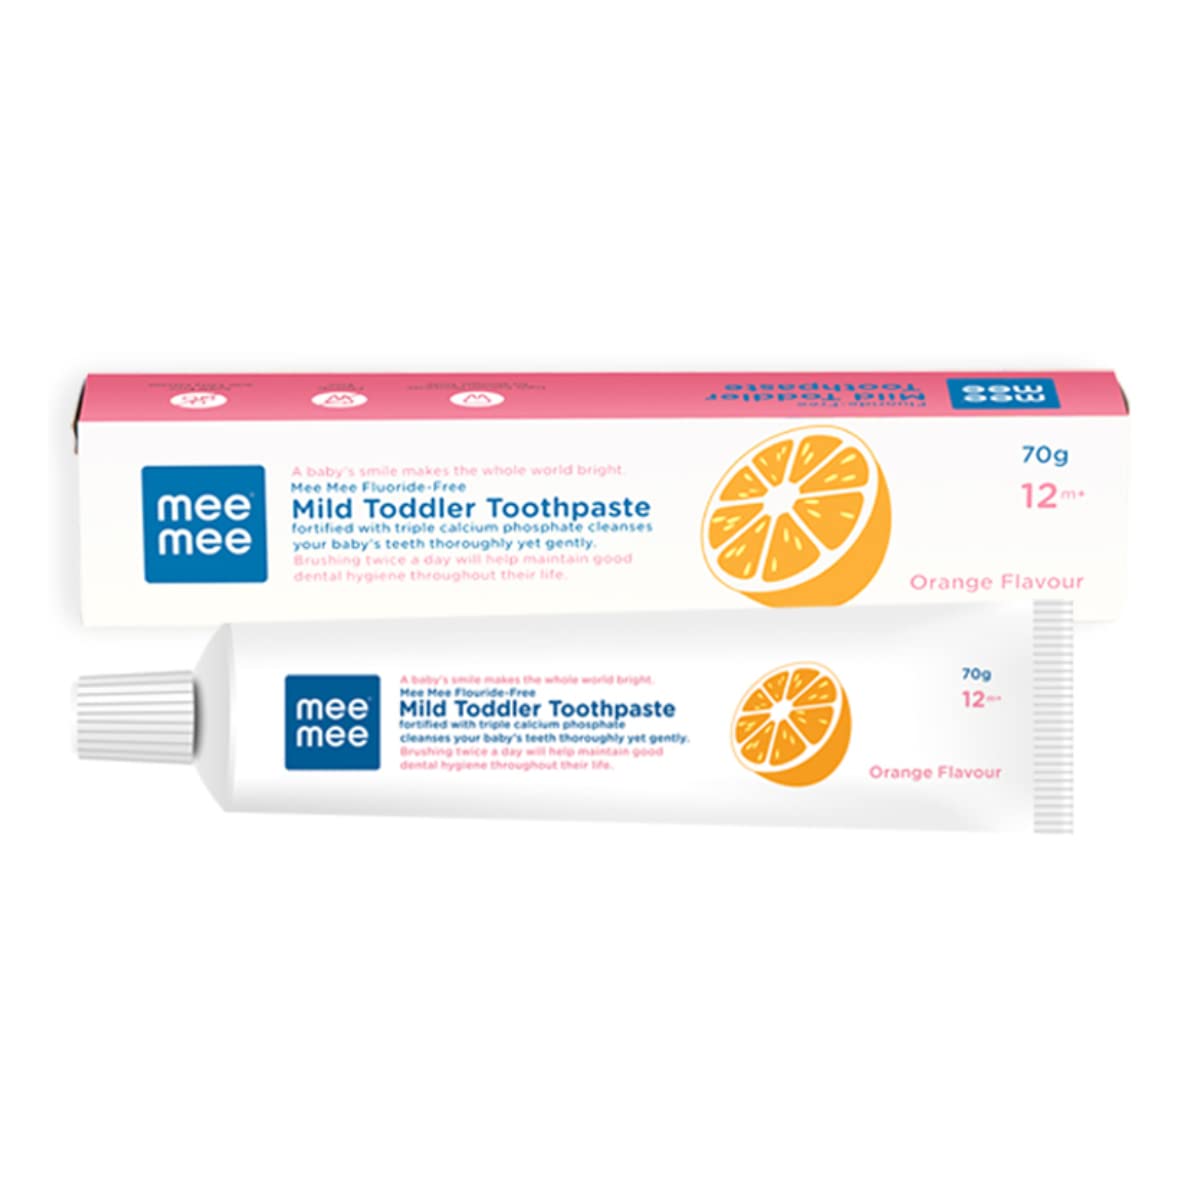 Mee Mee Fluoride-Free Mild Toddler Toothpaste - Orange Flavor